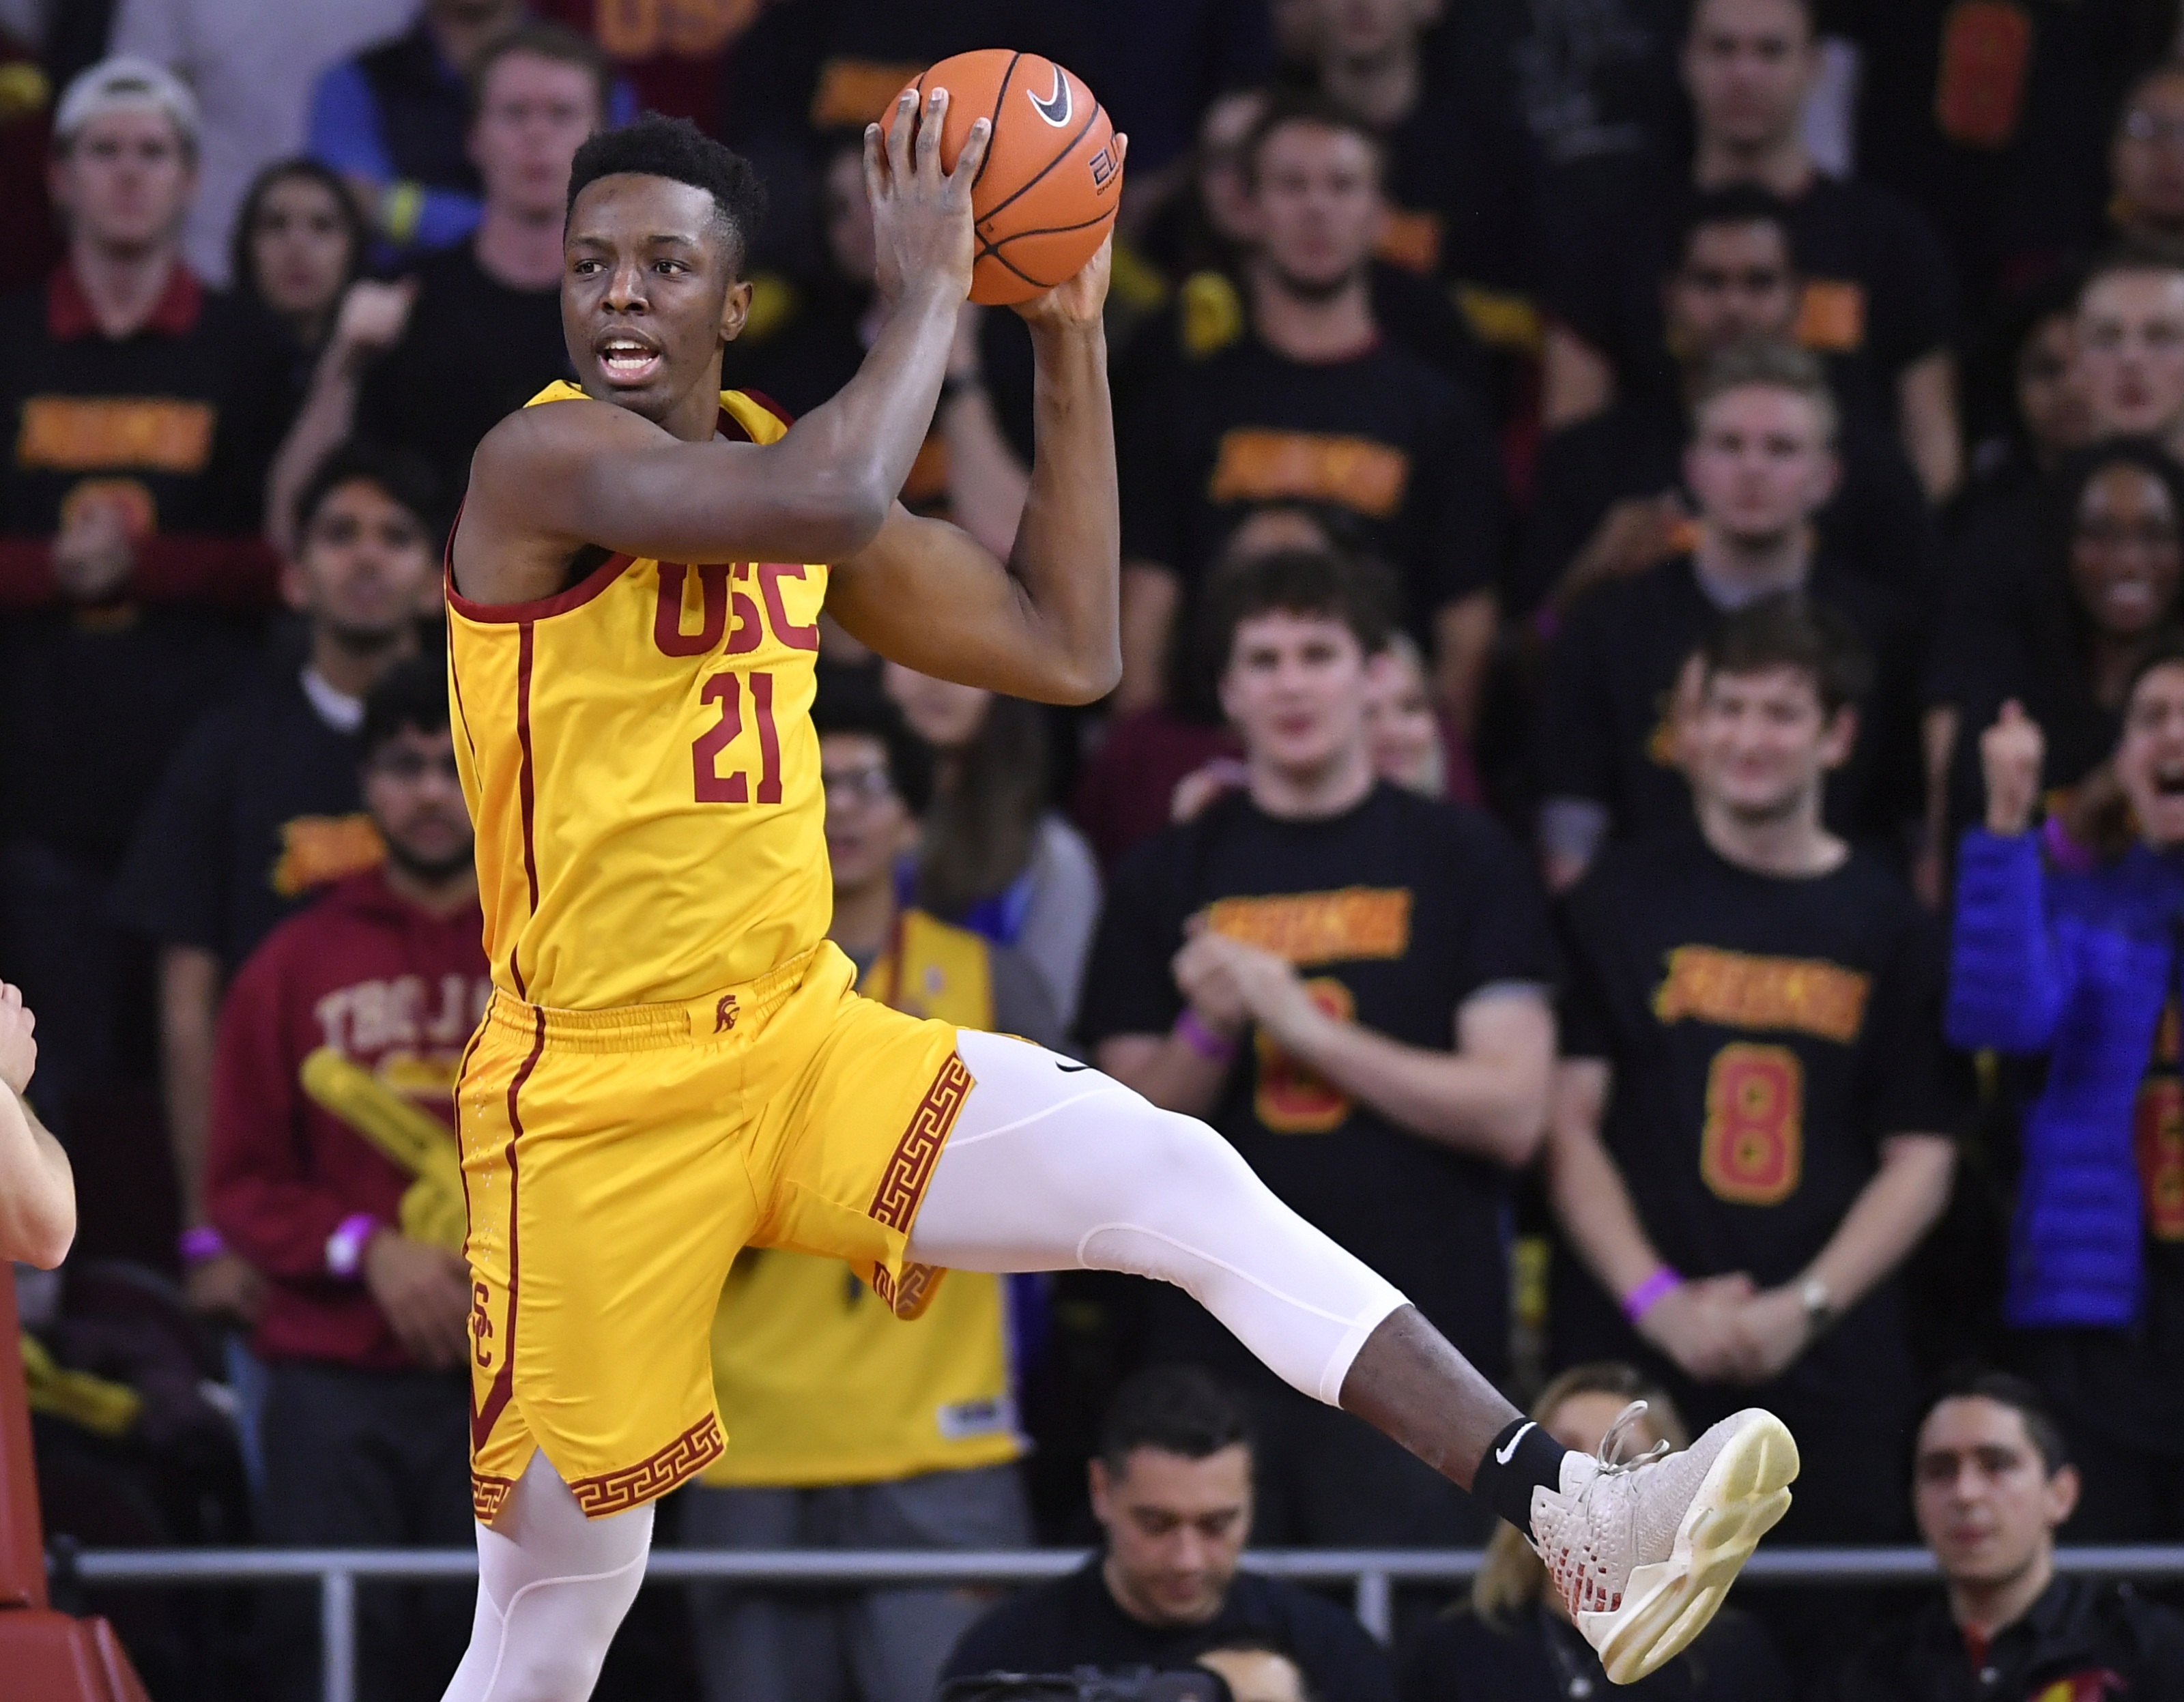 NBA Draft: Potential has stock of USC's Onyeka Okongwu rising